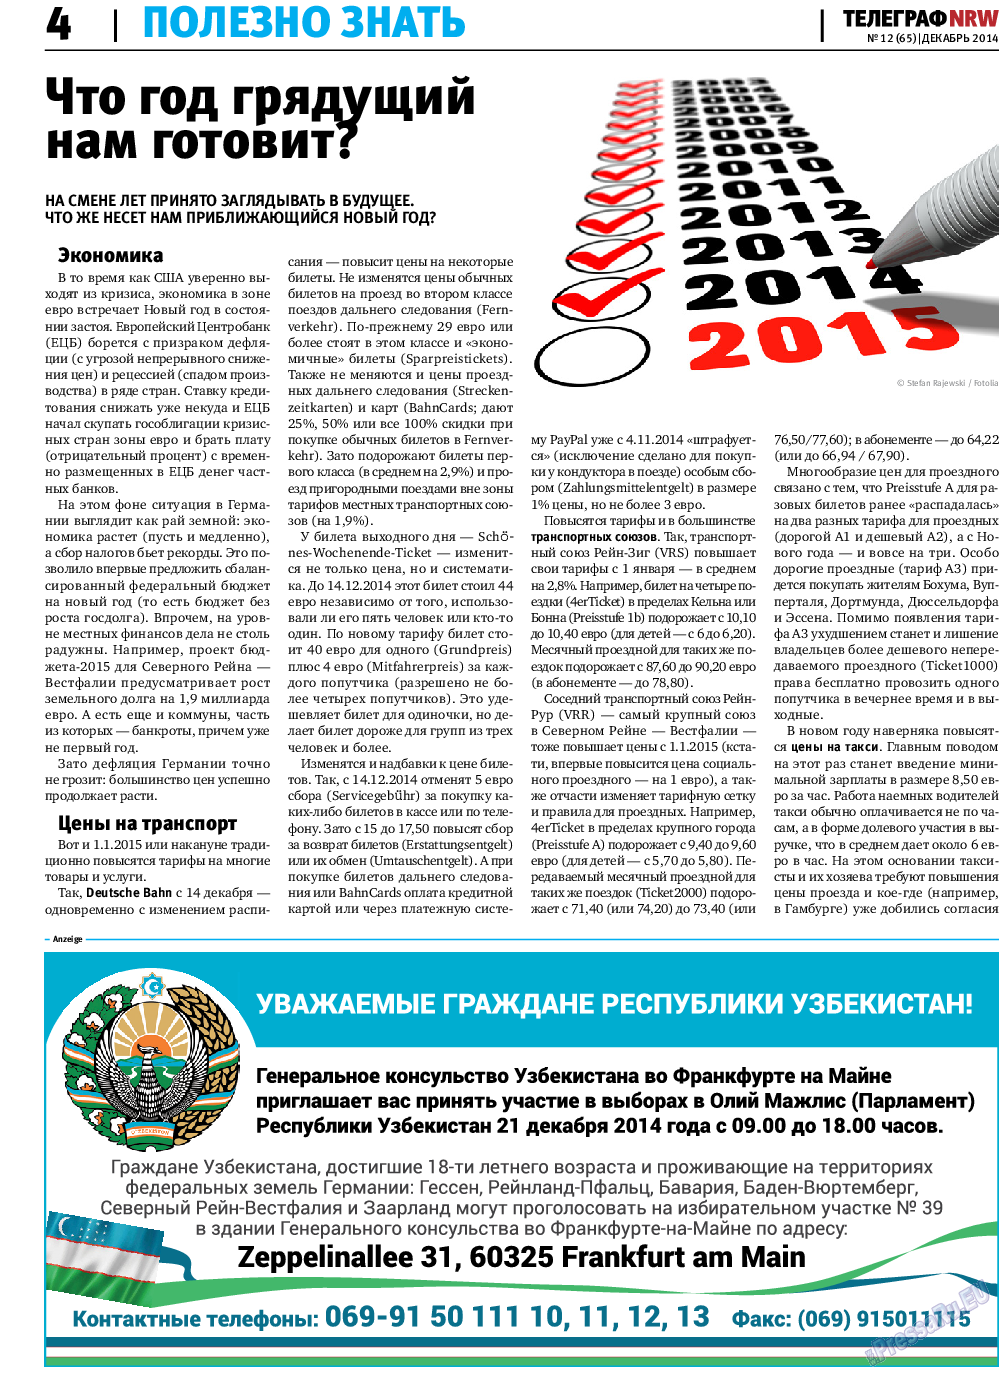 Телеграф NRW, газета. 2014 №12 стр.4